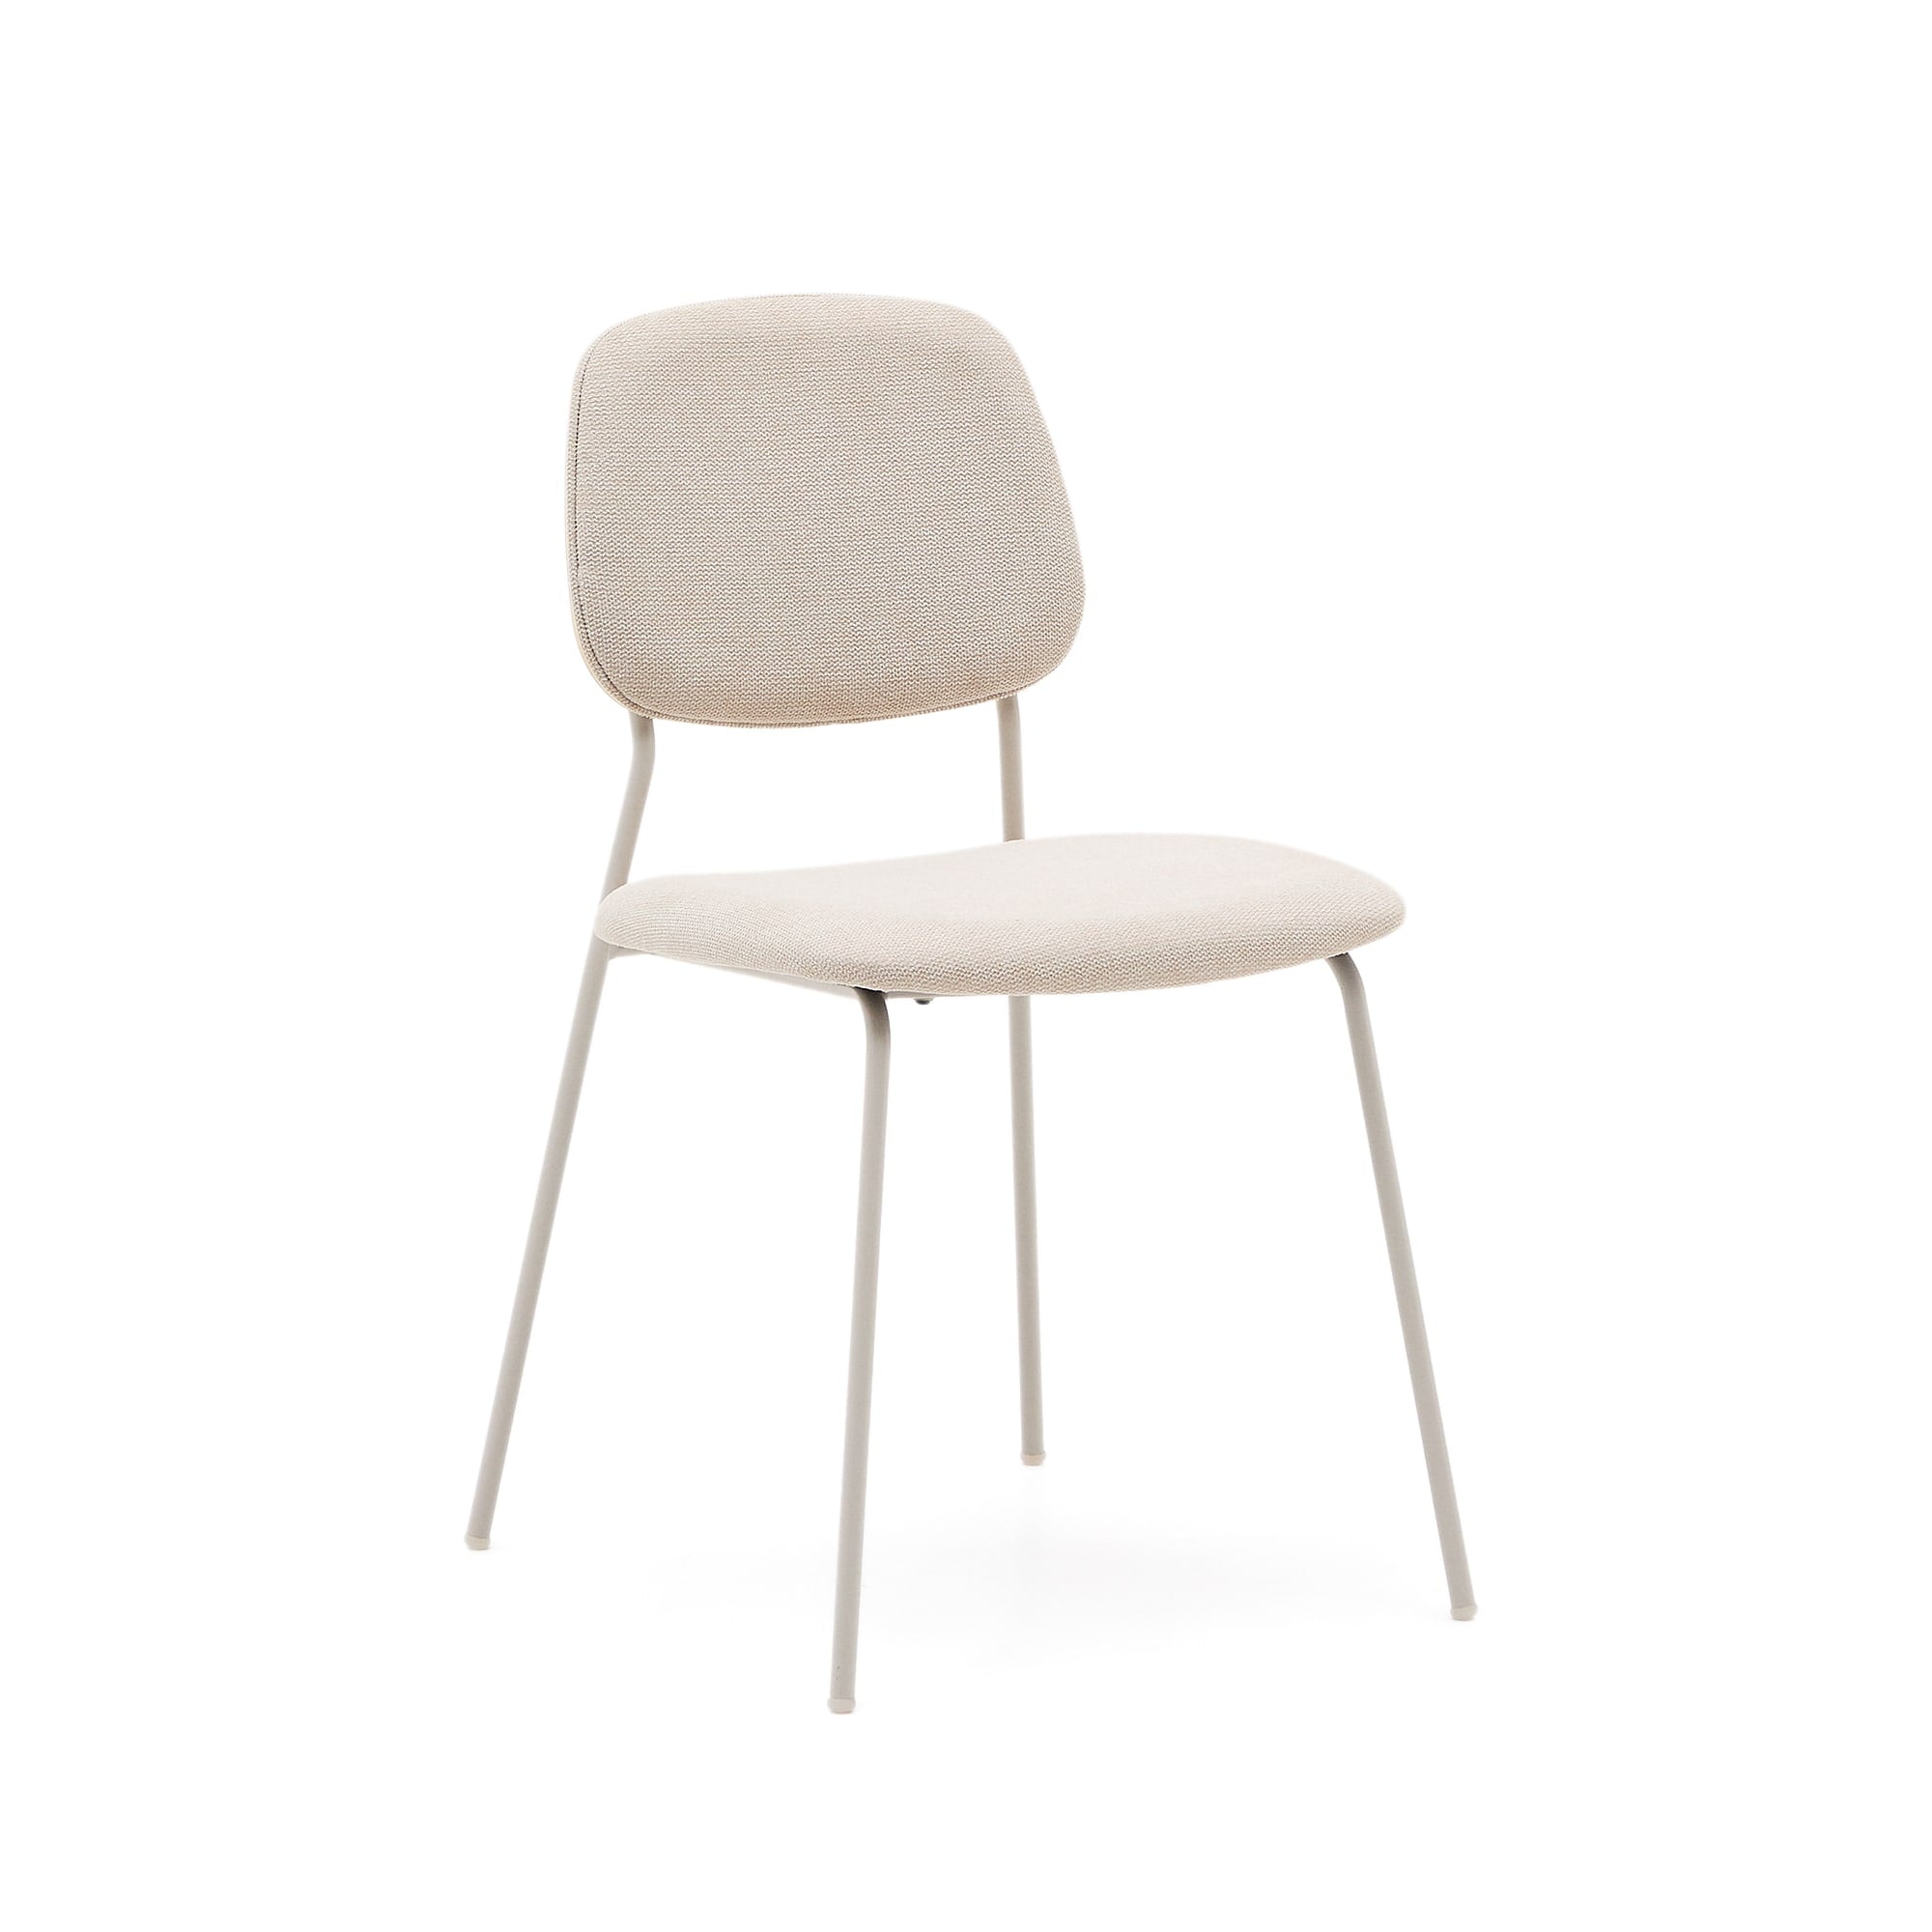 Benilda folding beige chair with oak veneer and steel in beige color, FSC Mix Credit